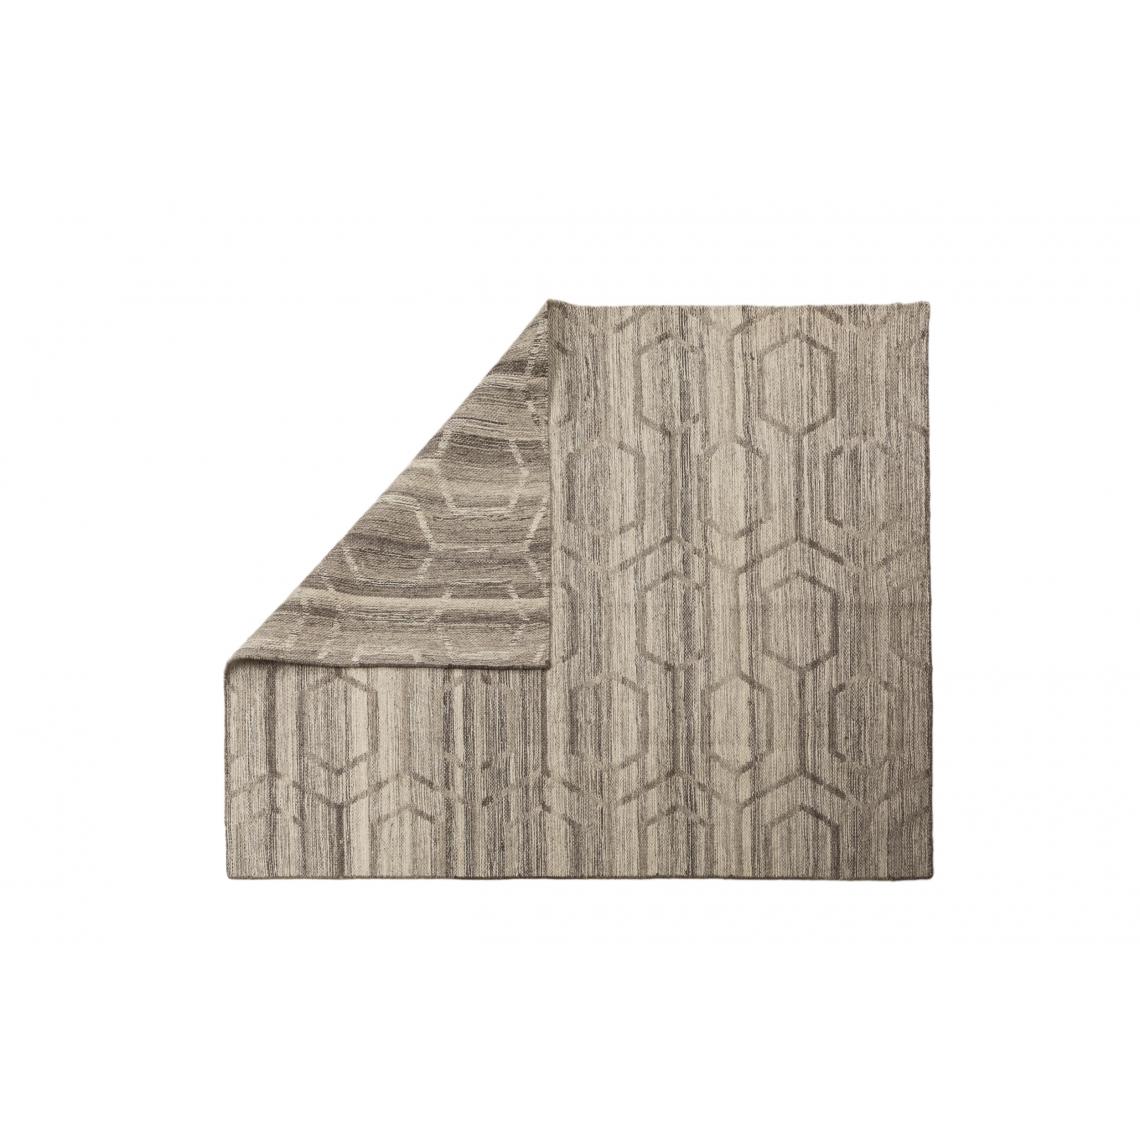 Alter - Tapis moderne Detroit, style kilim, 100% coton, gris, 150x100cm - Tapis